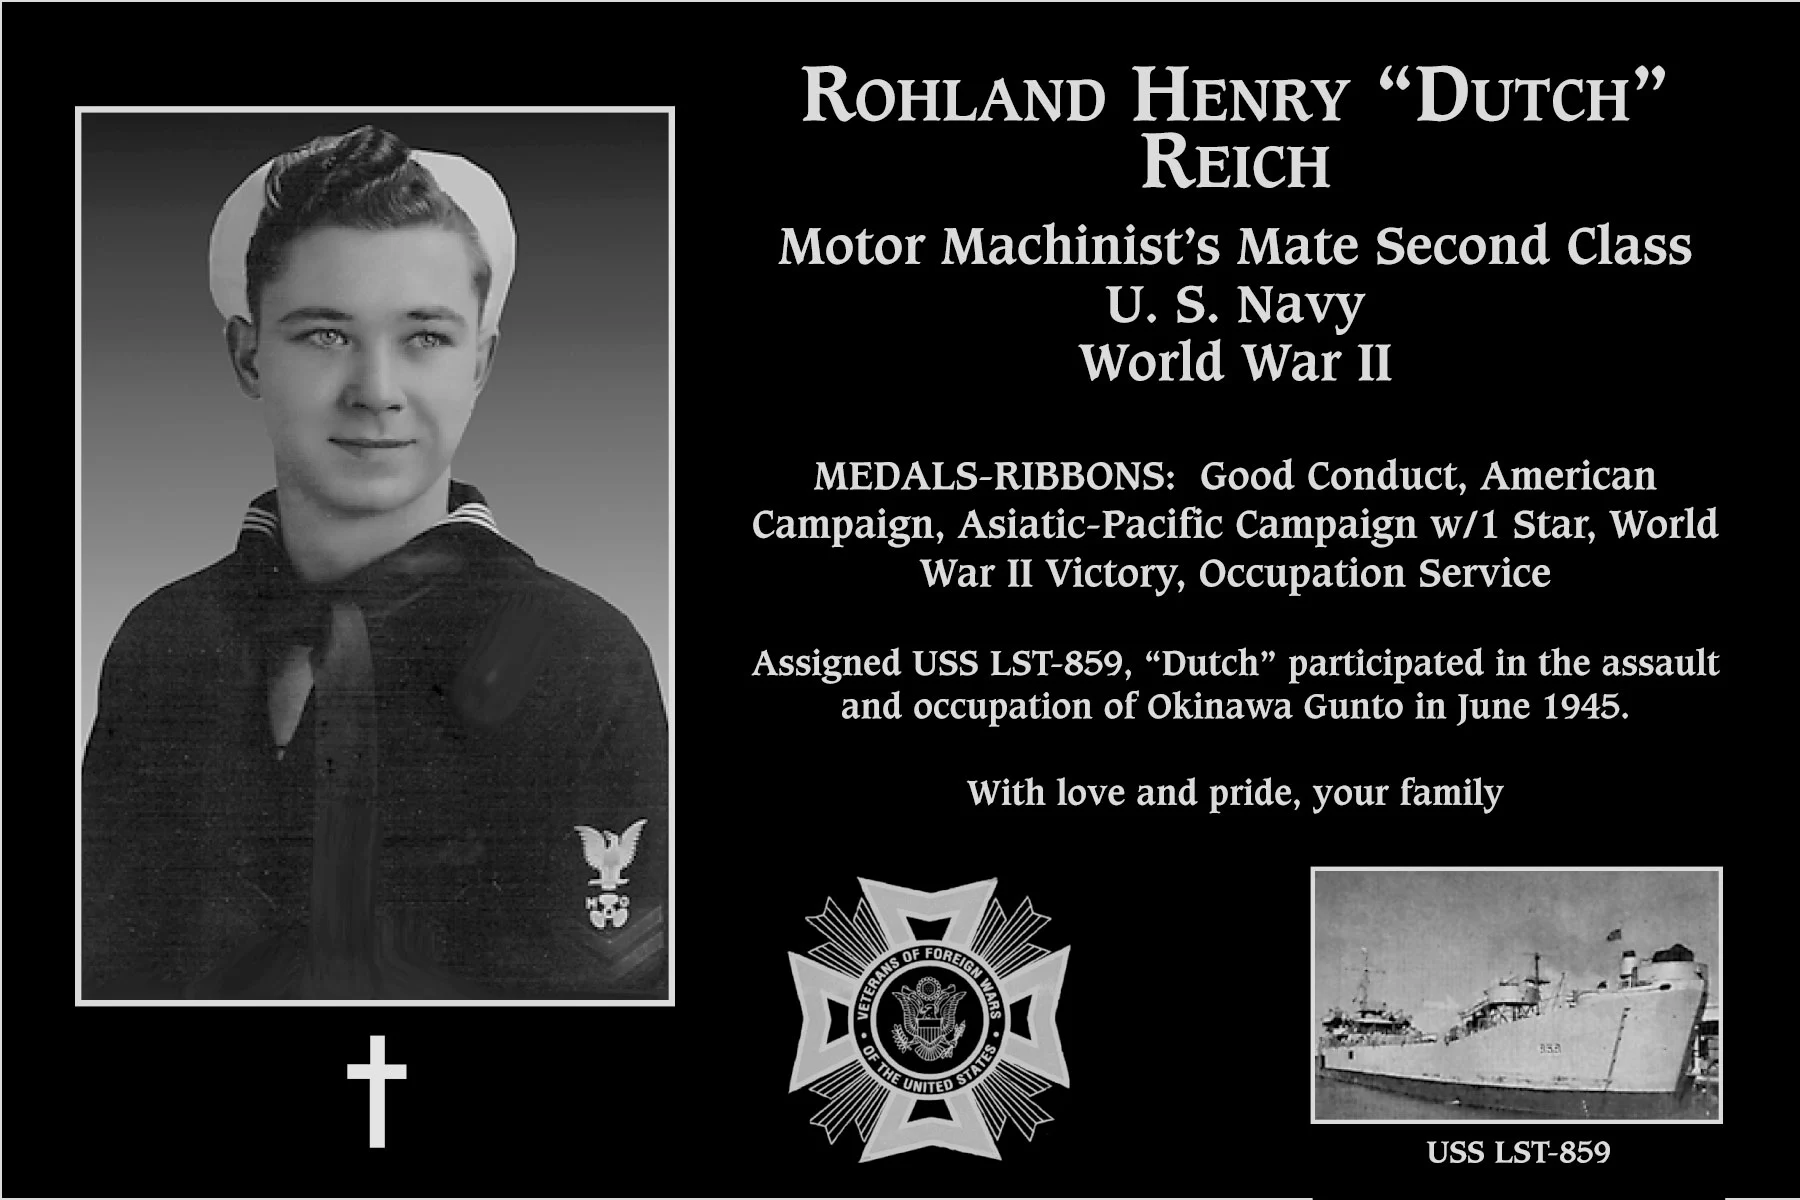 Rohland Henry “Dutch” Reich